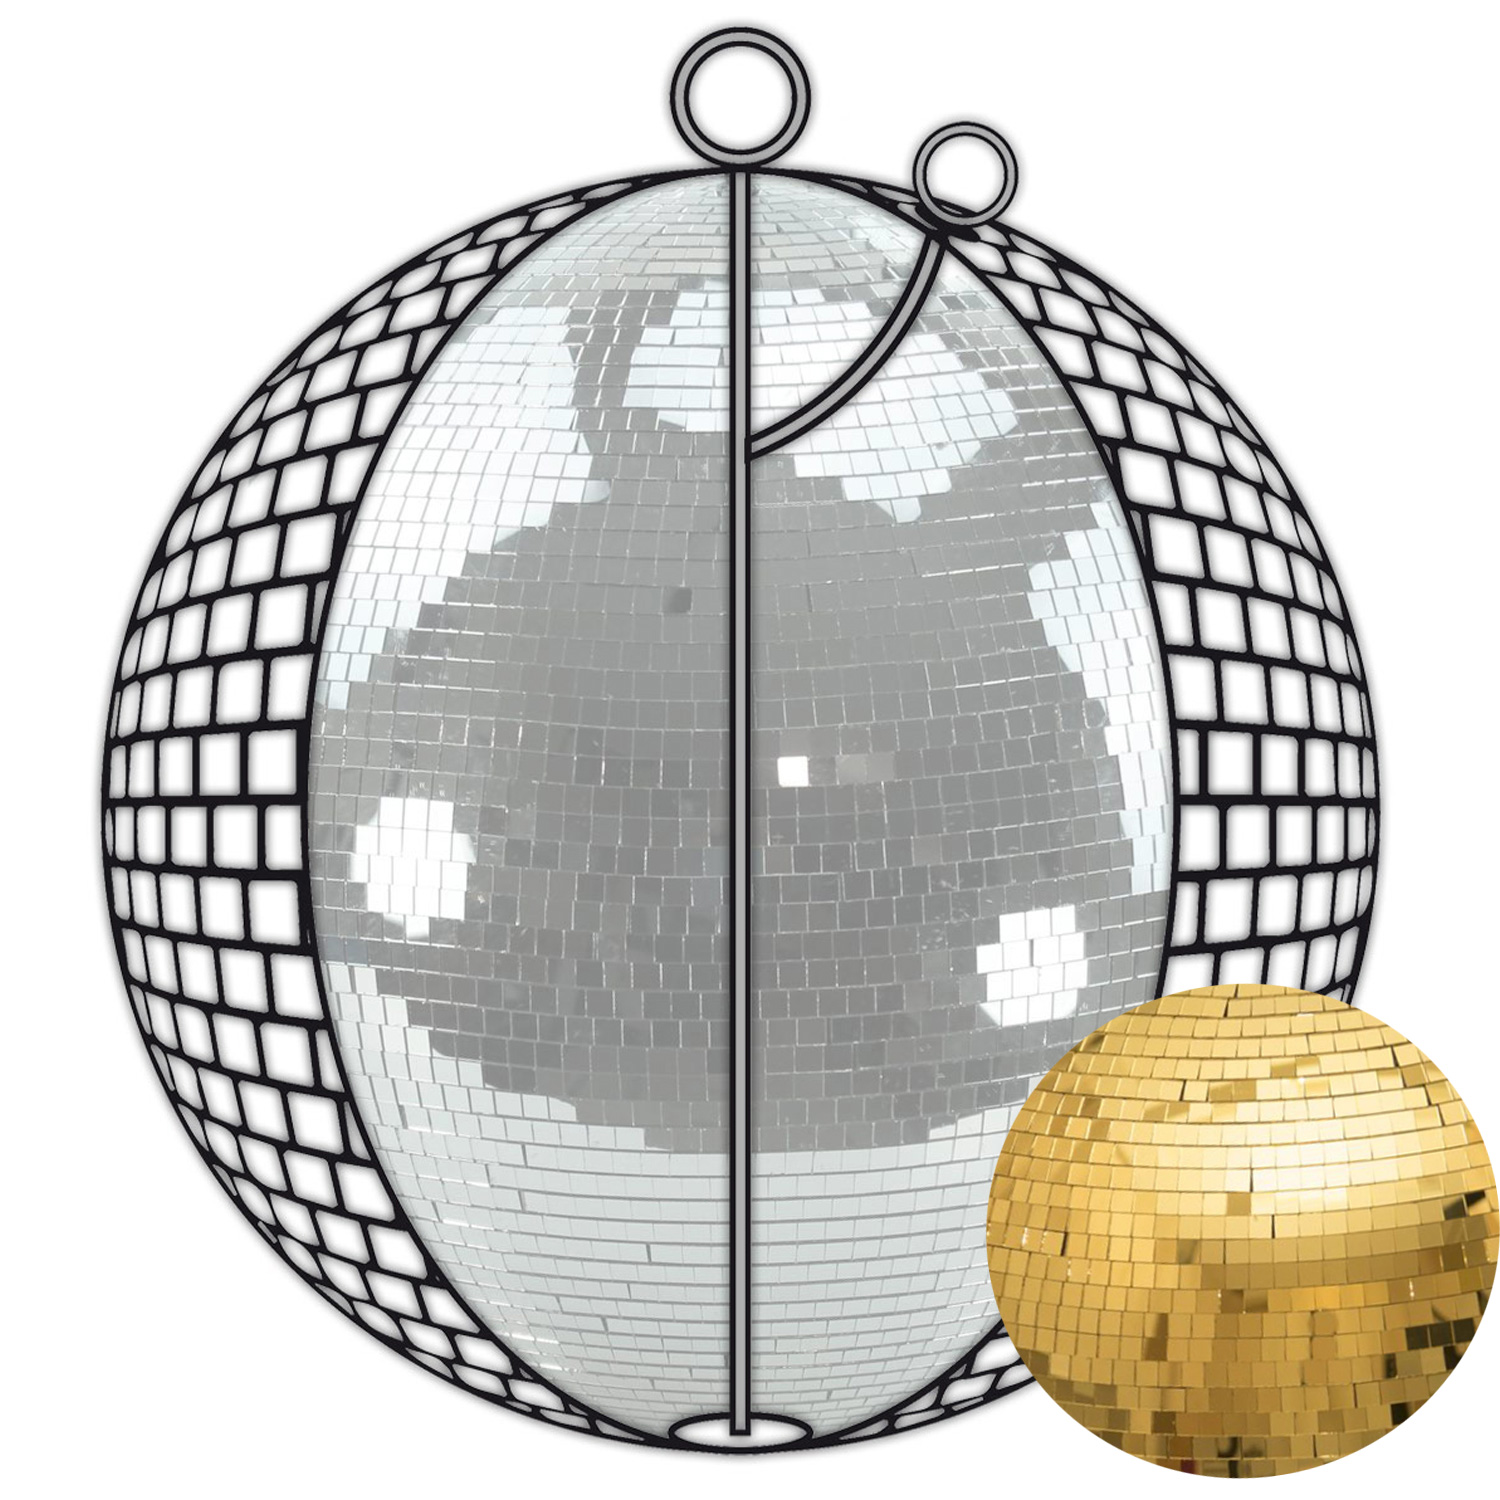 Spiegelkugel 75cm gold- Diskokugel (Discokugel) Party Lichteffekt - Echtglas - mirrorball safety gold color